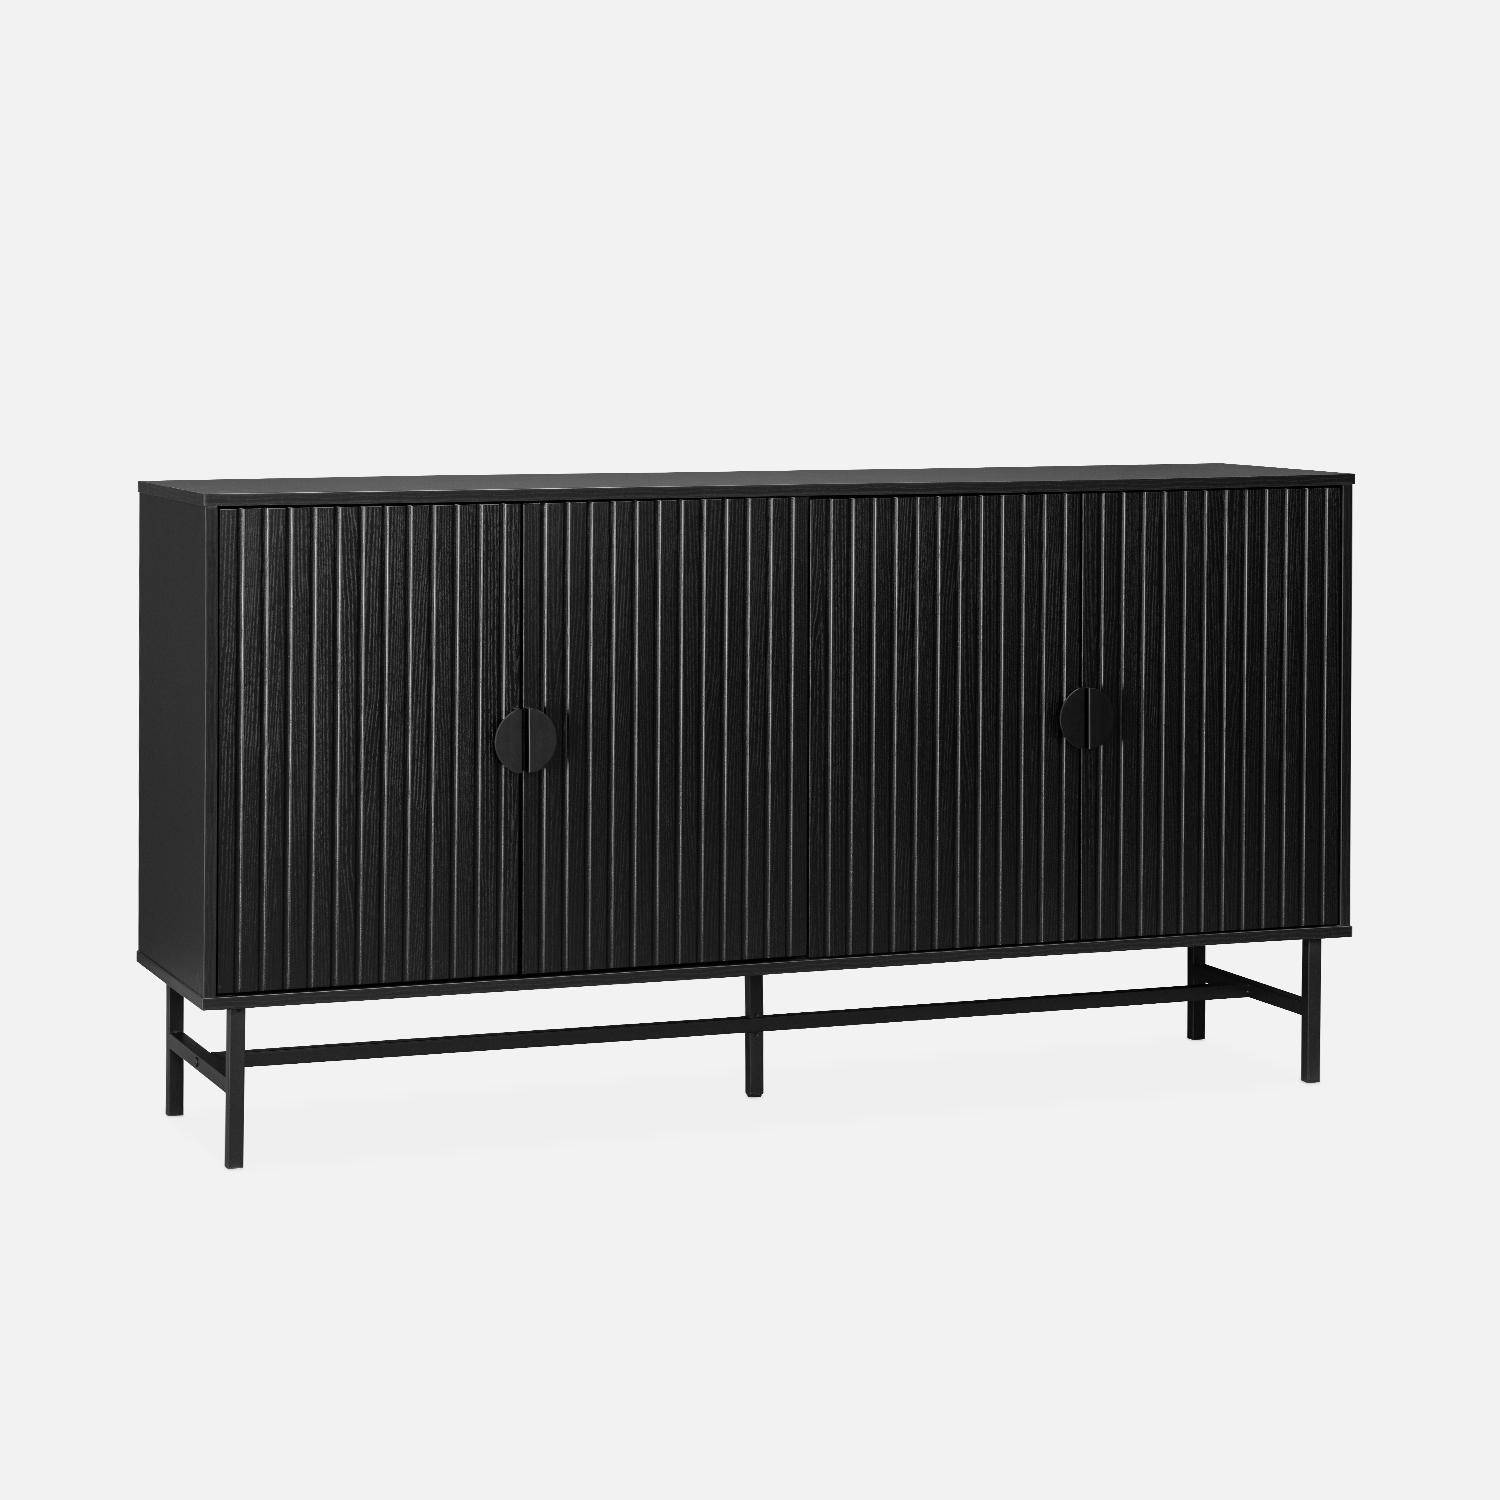 Sideboard cabinet with two doors and one shelf, ridged effect, industrial style, 157.5x39x83cm - Bazalt - Black,sweeek,Photo4